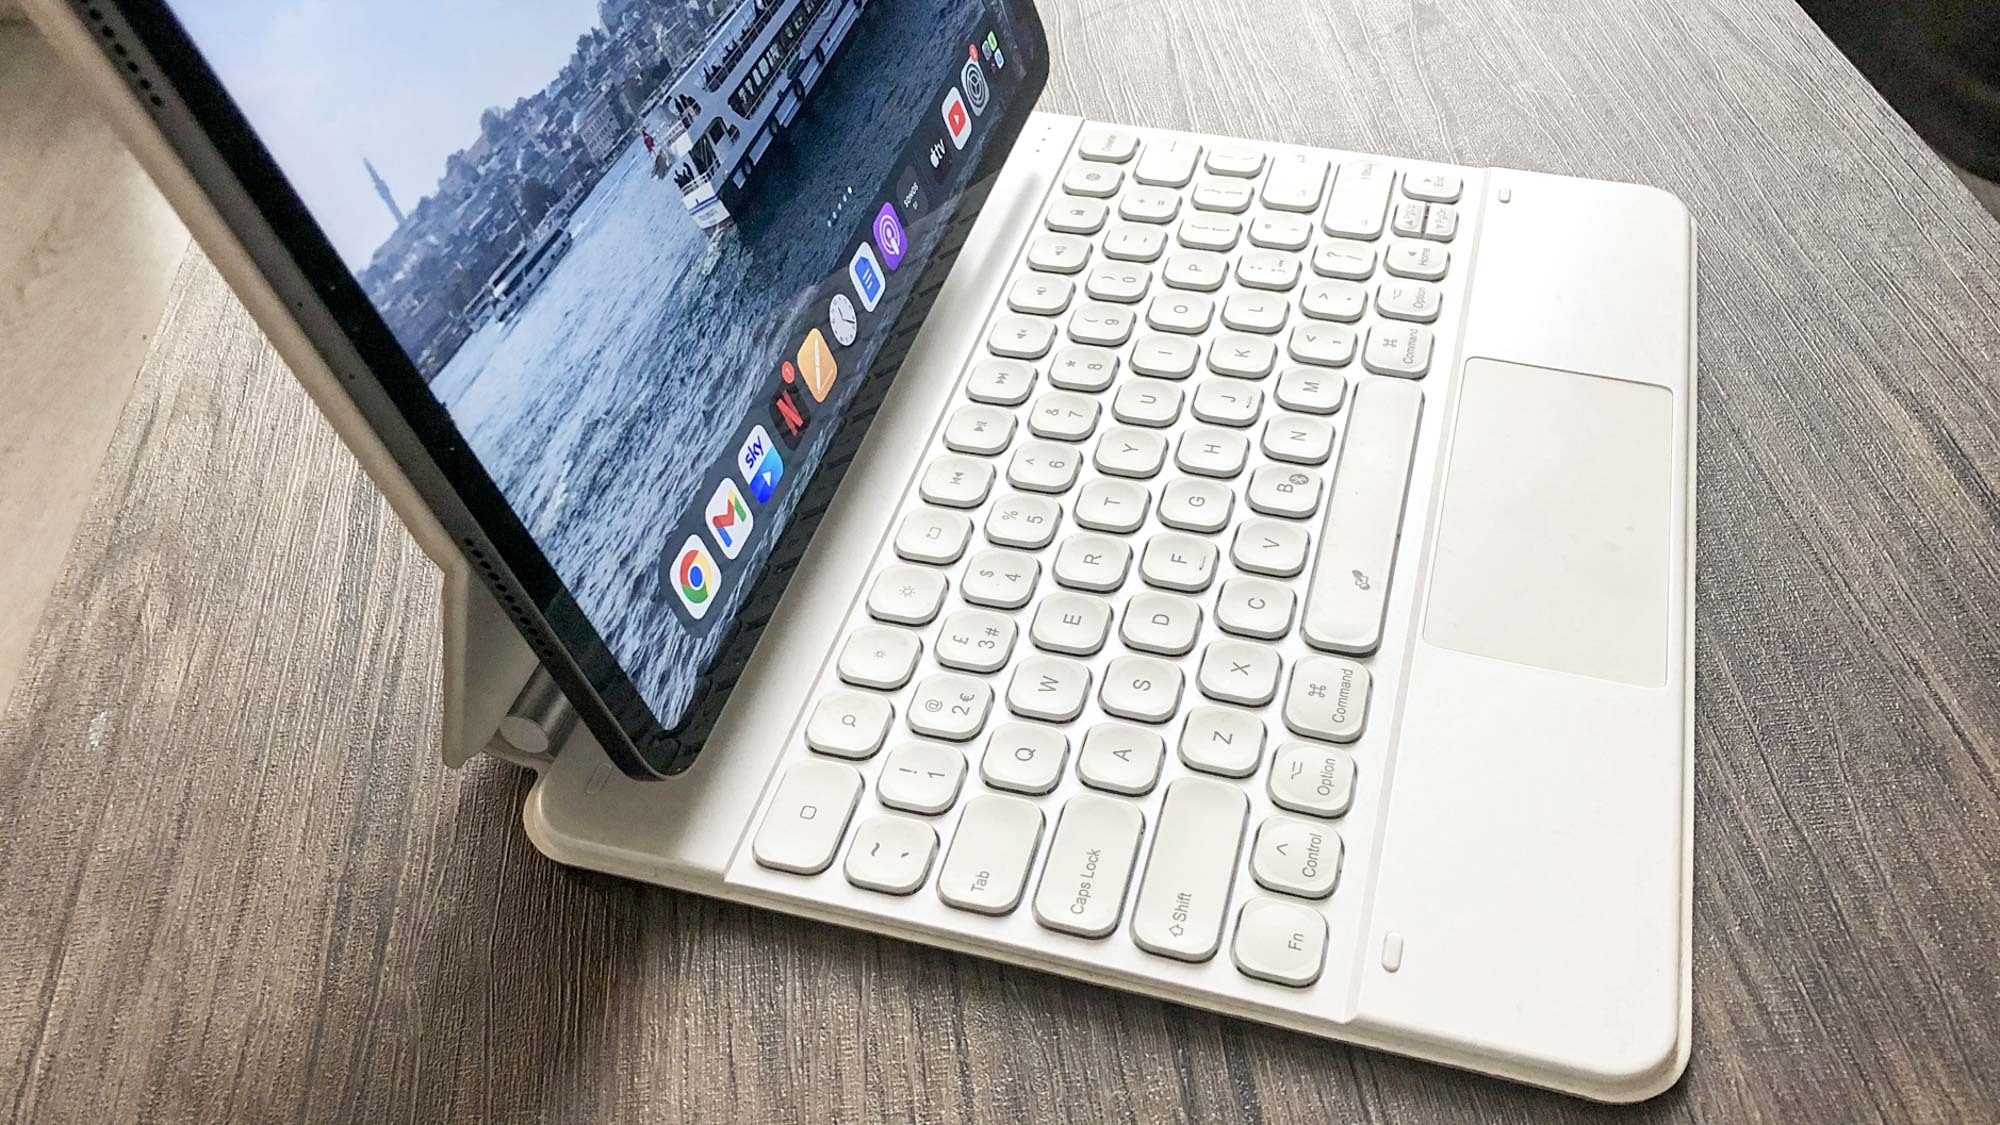 Keyboards - iPad Accessories - Apple